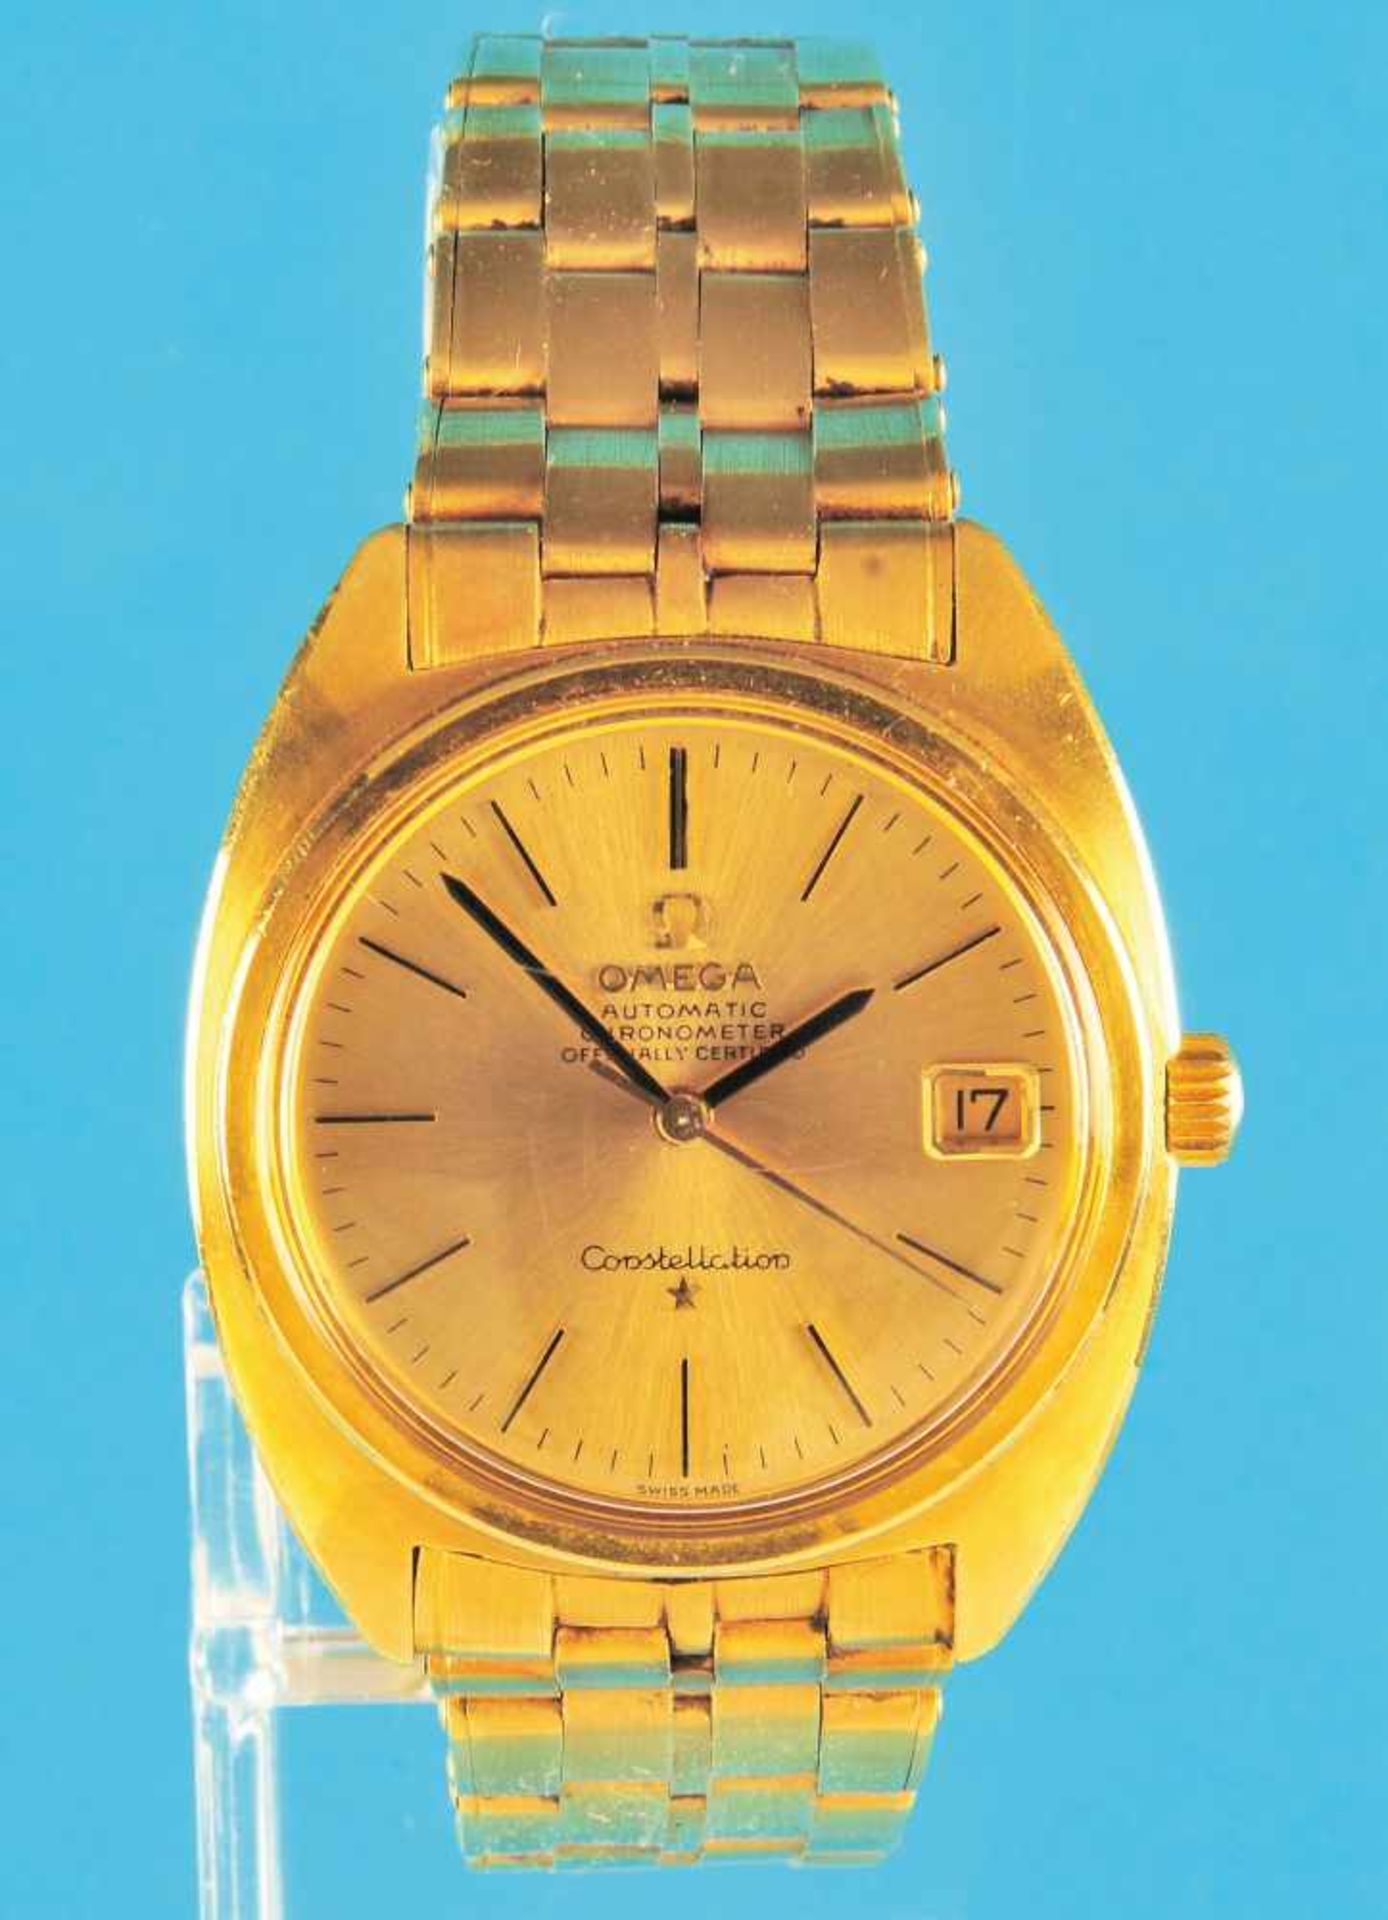 Goldarmbanduhr mit Goldgliederband, Omega Automatic, Chronometer, Constellation, vergoldetes